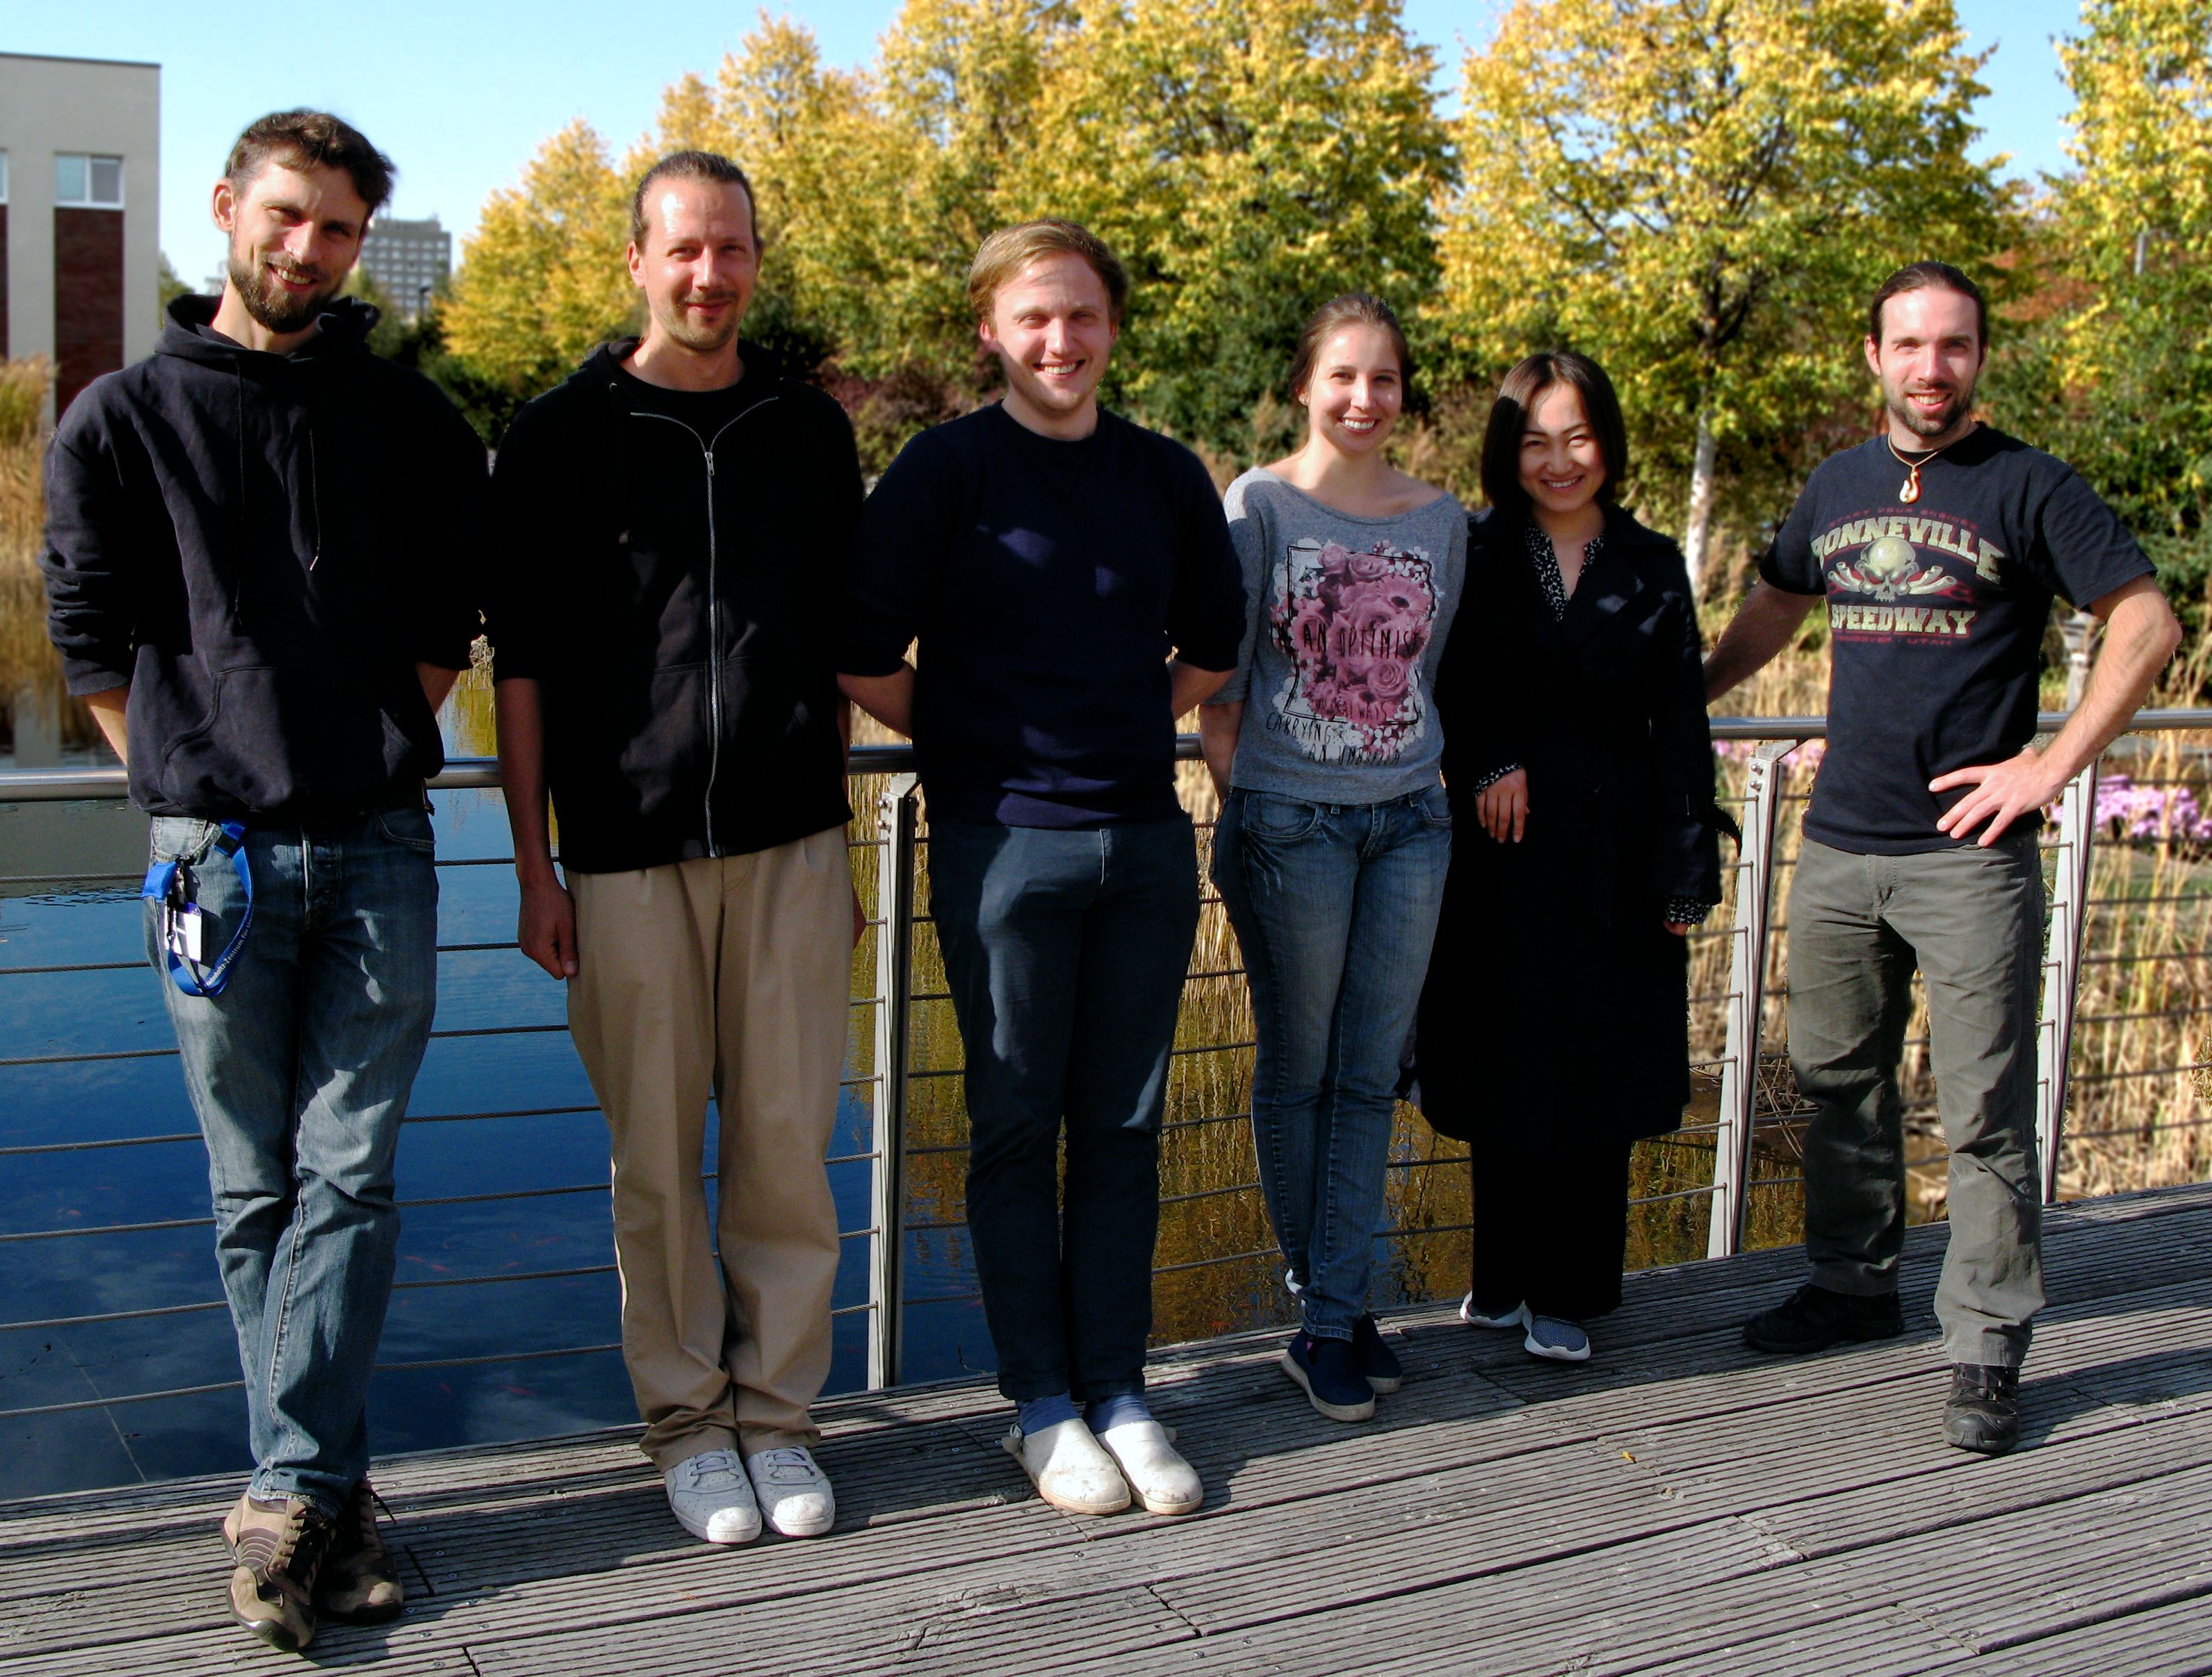 Das AG BioGeoOmics Team im Oktober 2018 (v.l.n.r.): Jan, Kai, Martin, Maria, Limei, Oliver. Foto: Bettina Seiwert (UFZ)